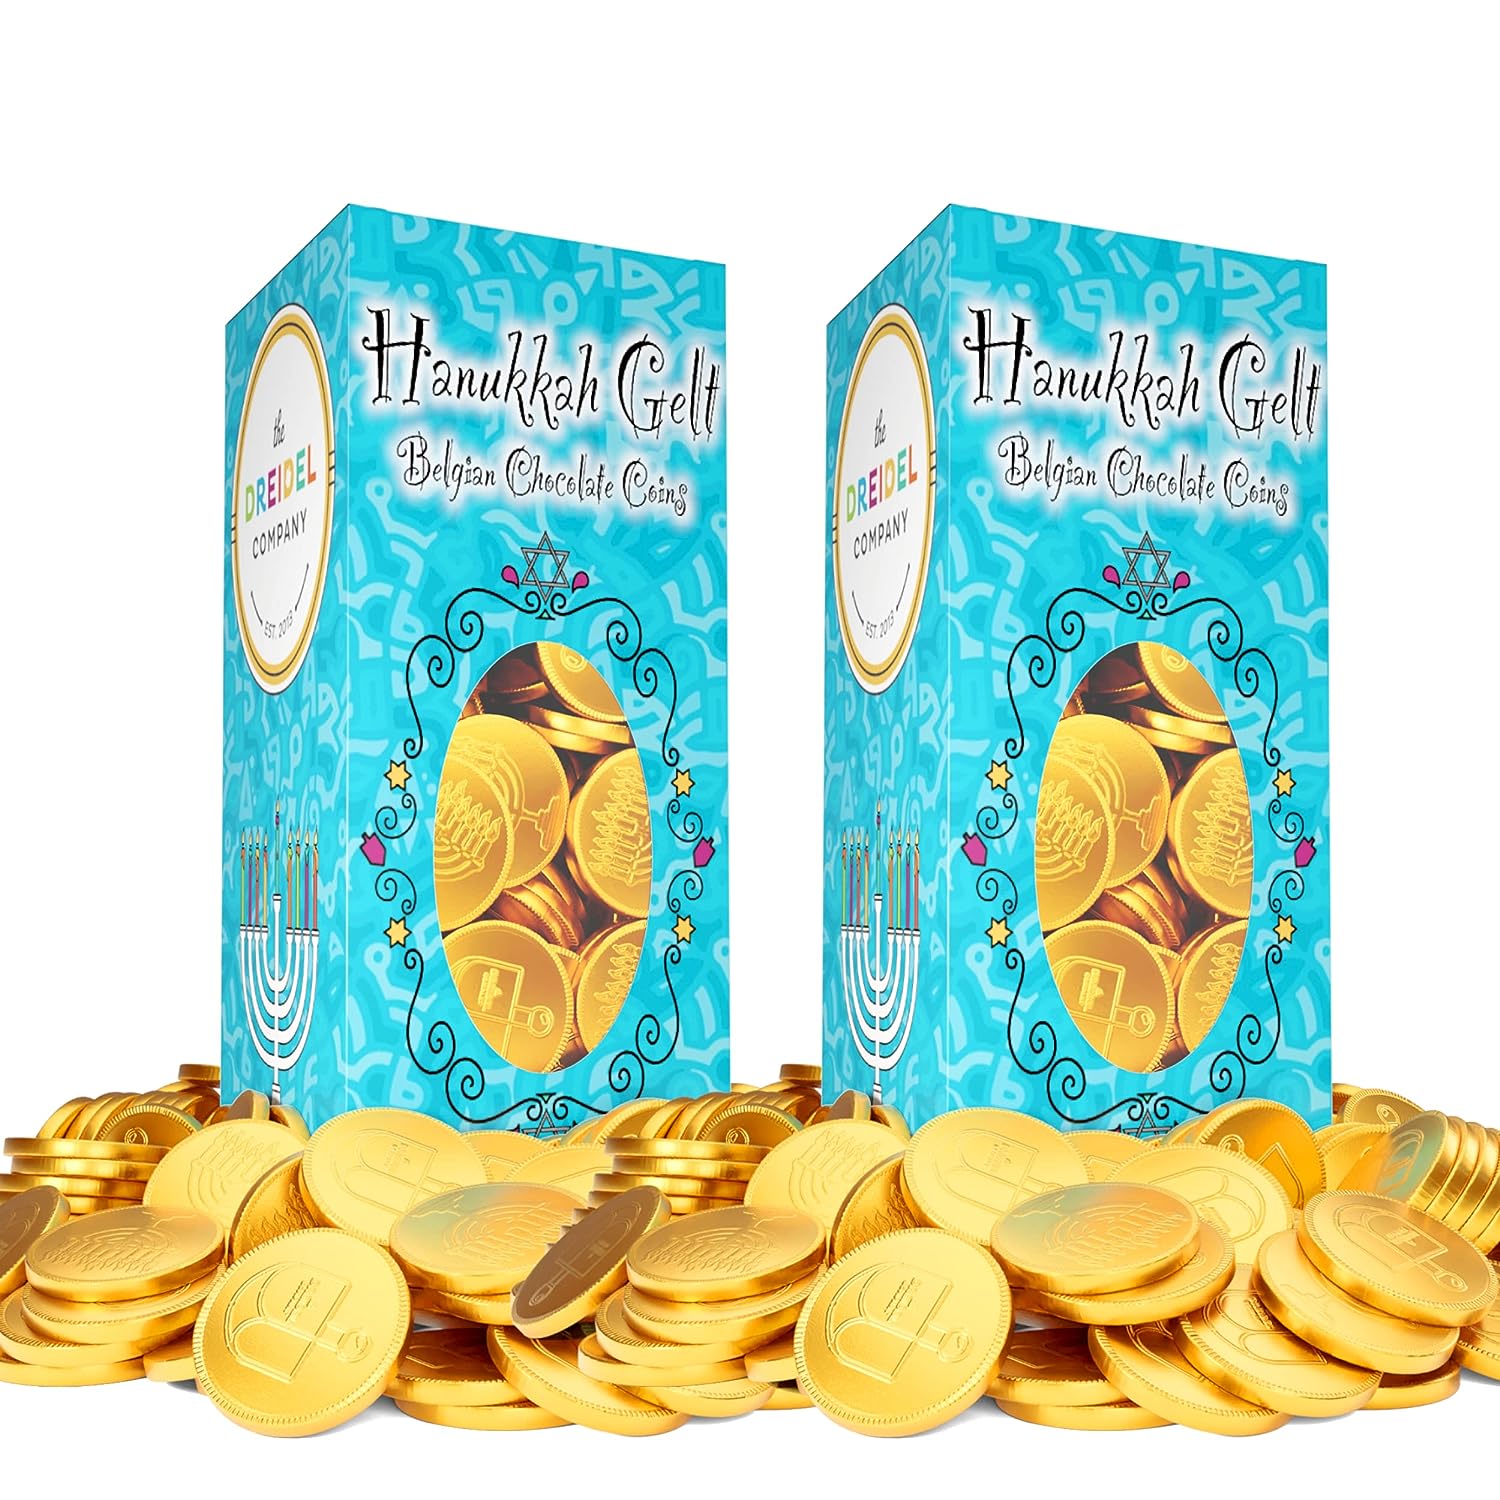 Hanukkah Chocolate Gelt - Nut-Free - Belgian Milk Chocolate Coins - 1LB - Kosher Chanukah Gelt (2-Pack, 2 Lbs Total)